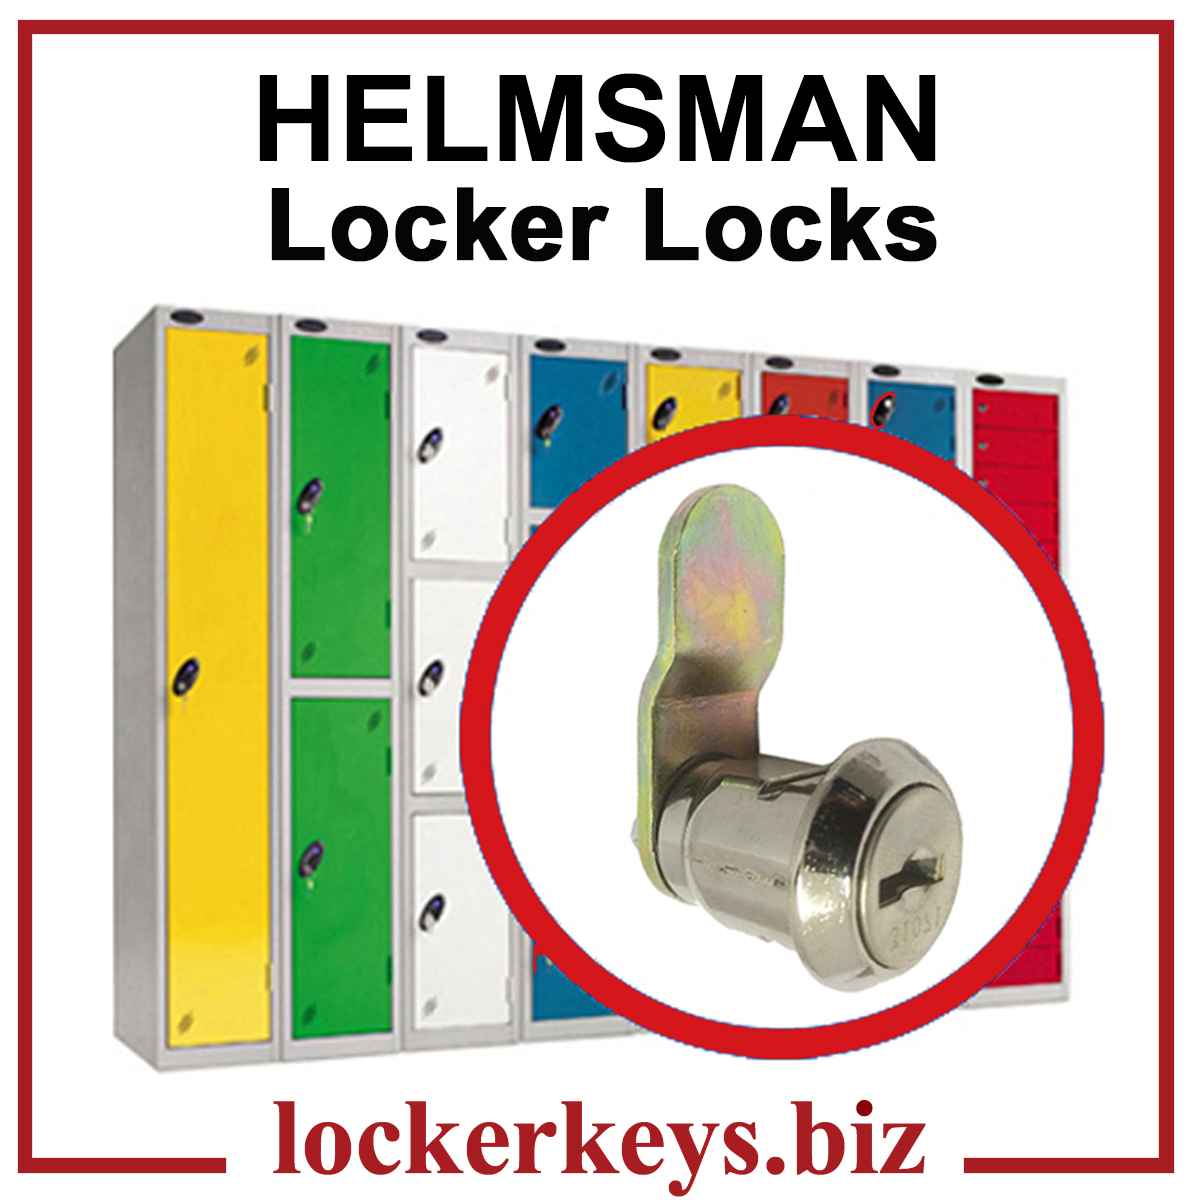 Helmsman Locker Locks